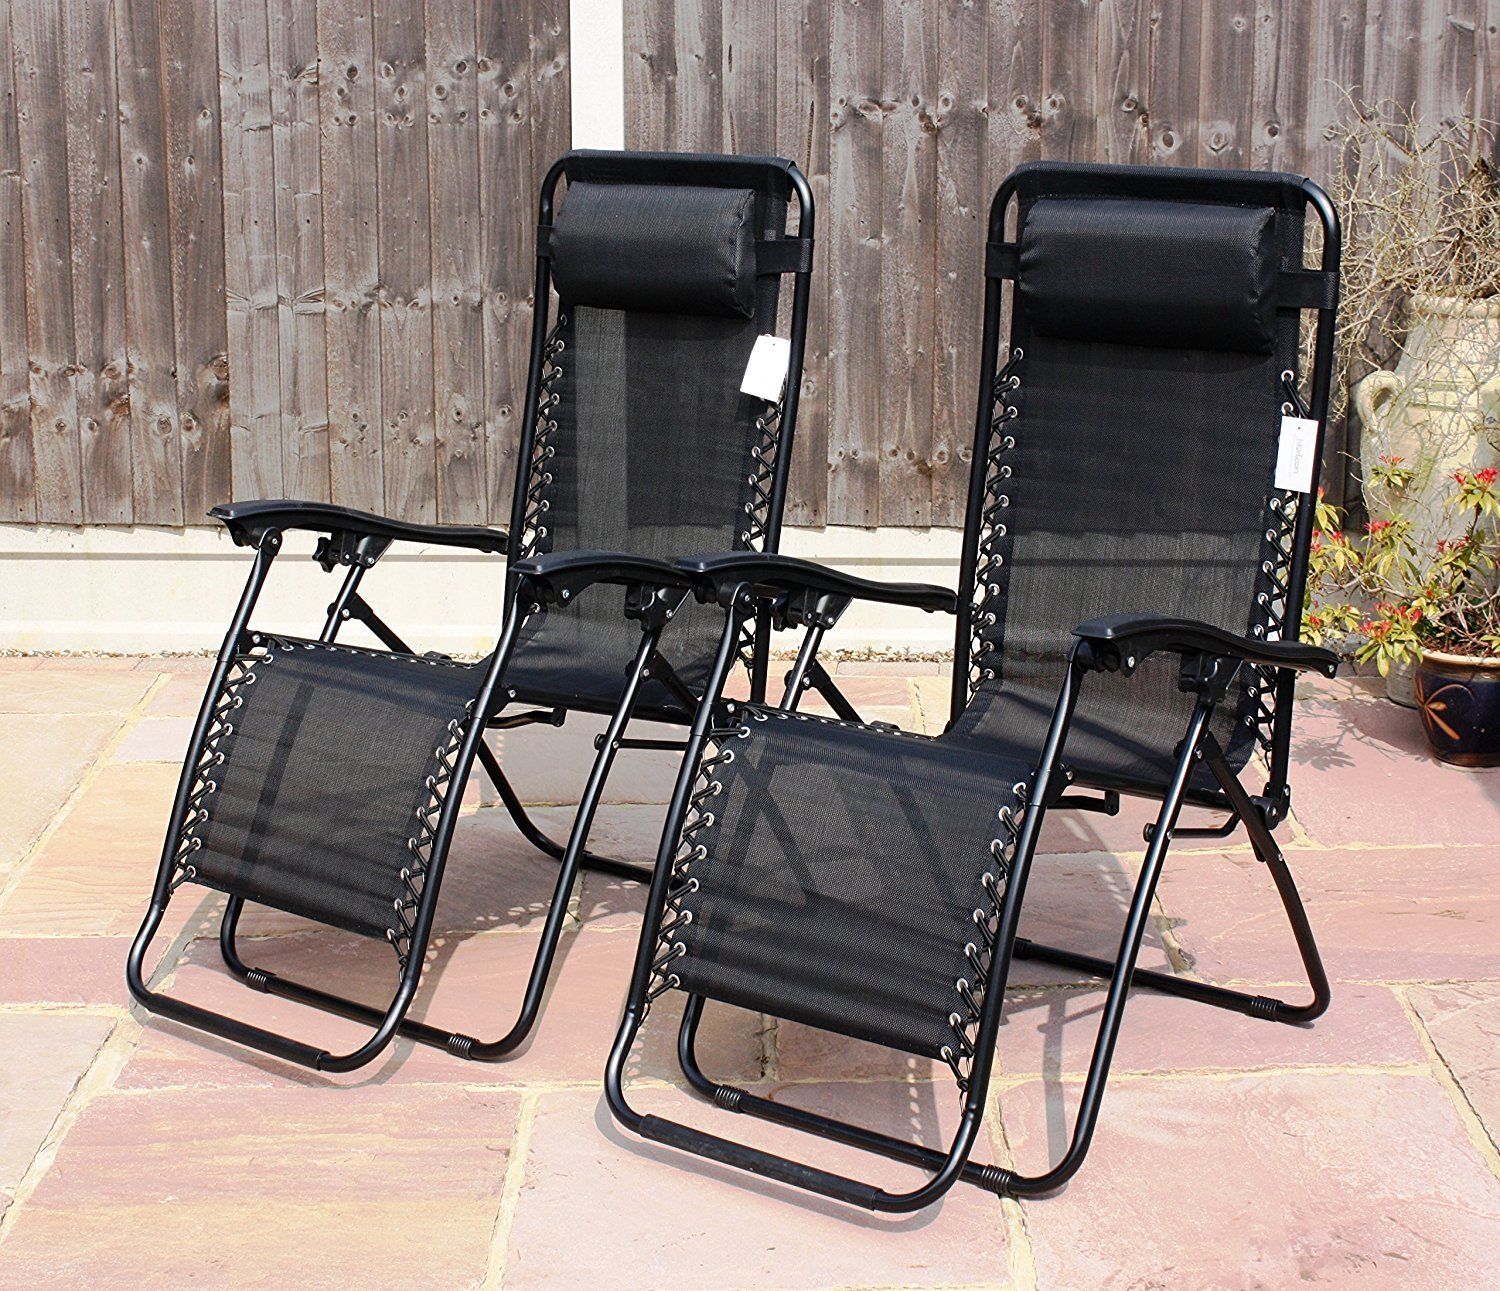 sunncamp chairs